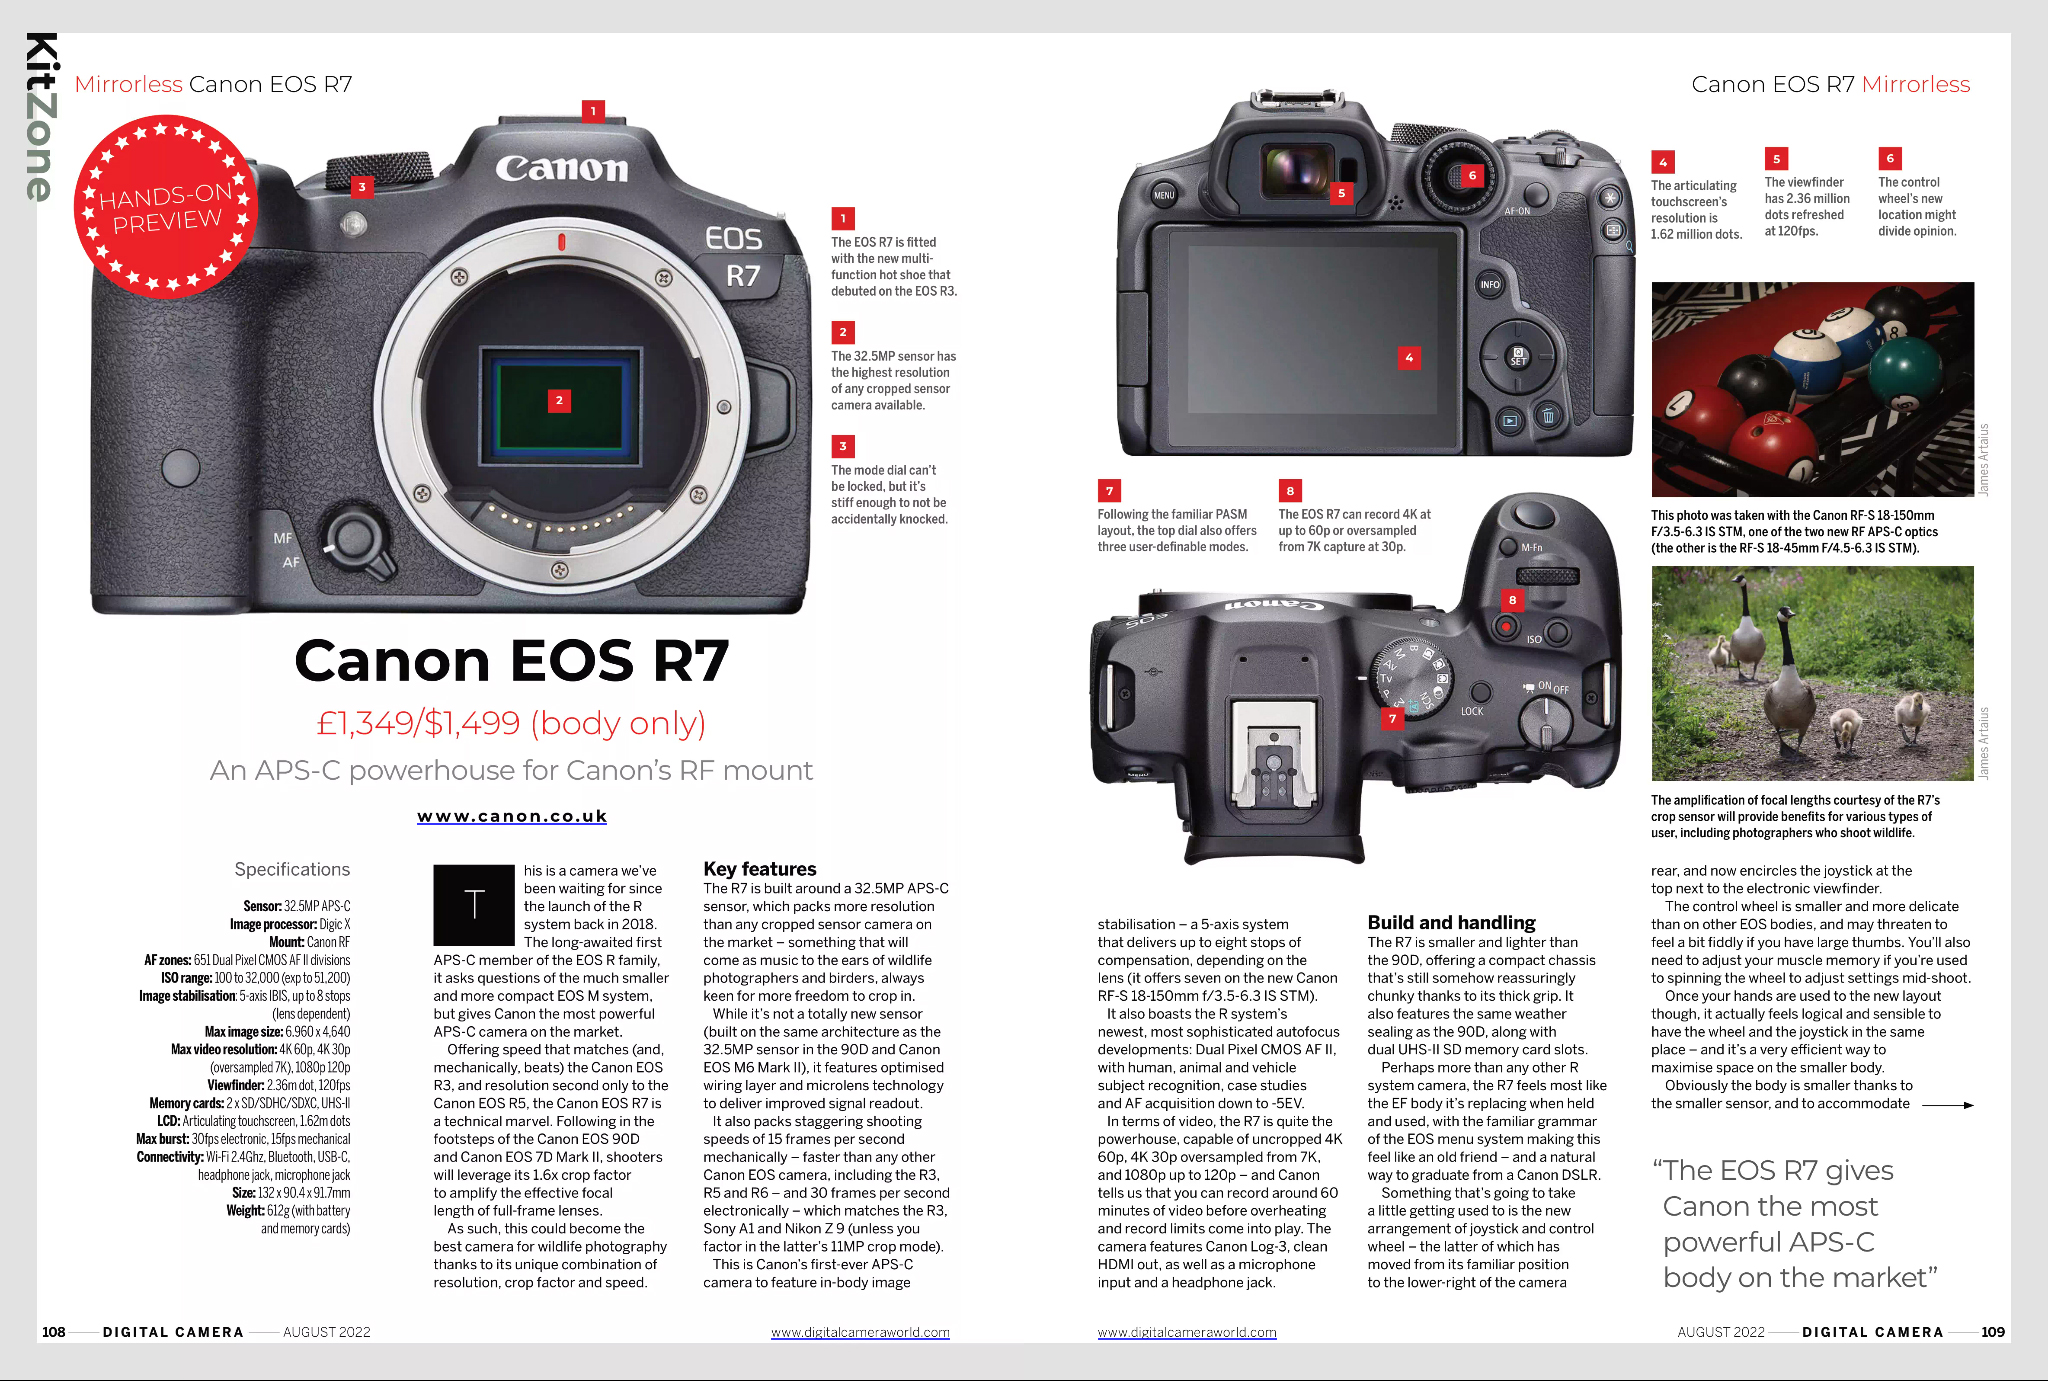 DCam 258 canon eos r7 review image